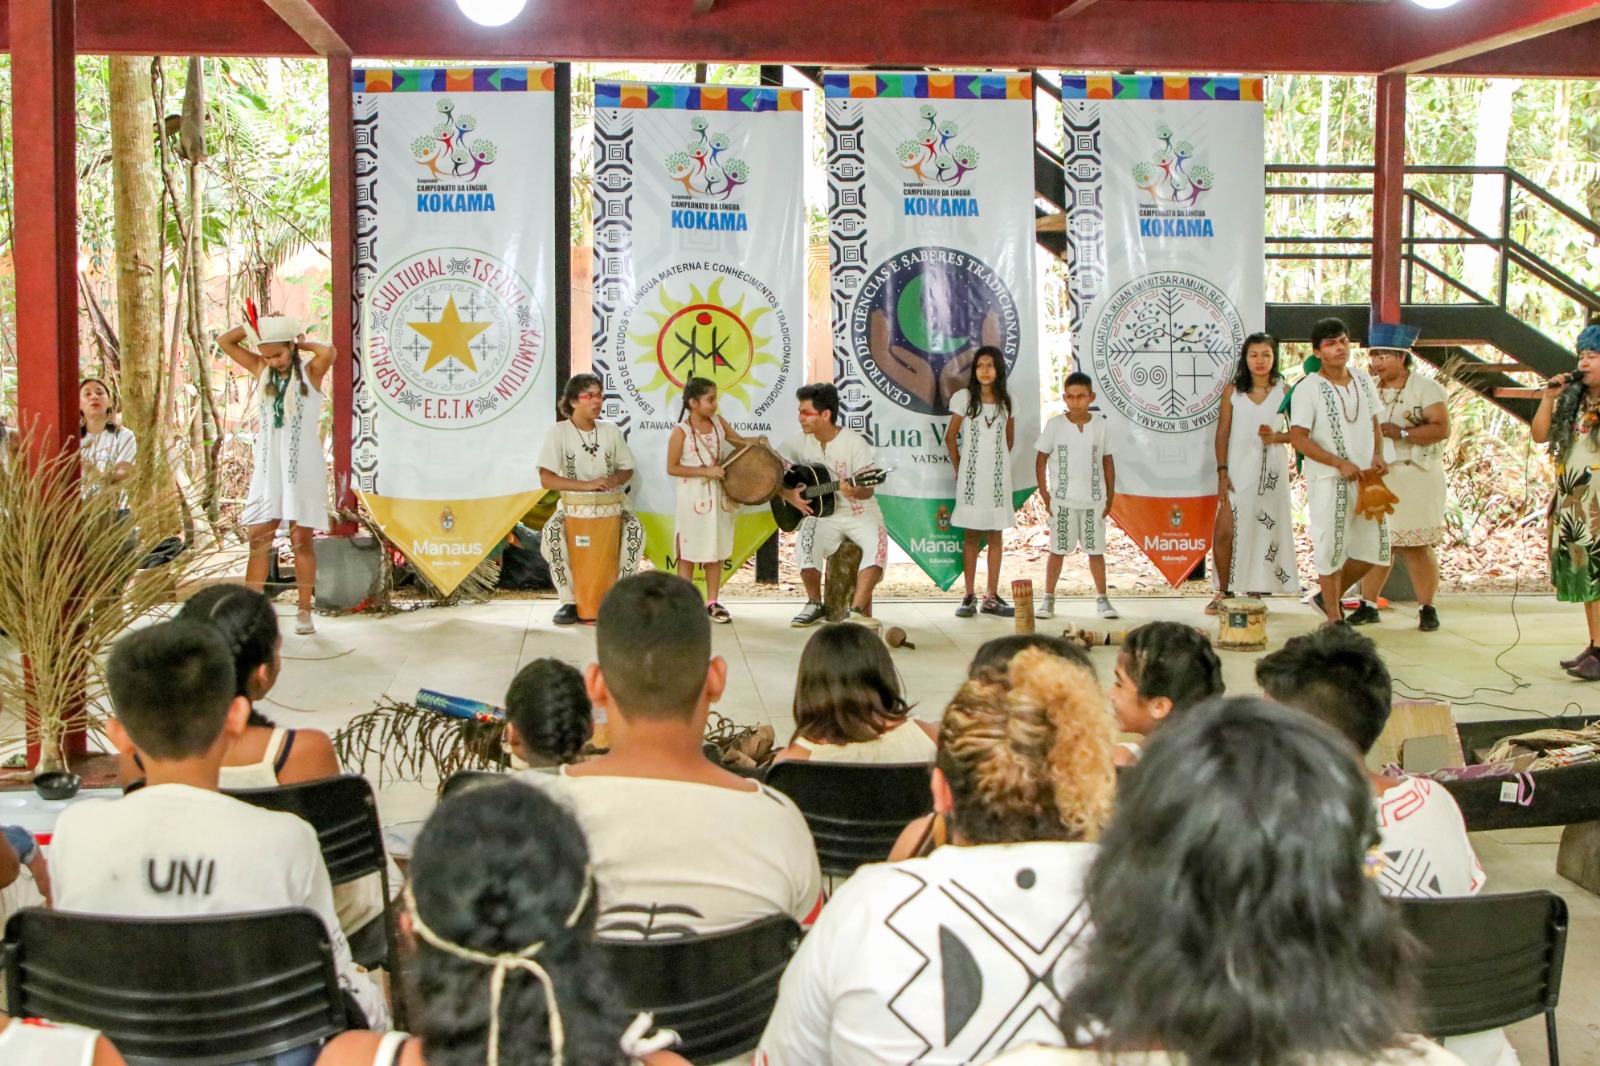 Campeonato da língua kokama em Manaus. Crédito: Altaci Corrêa Rubim